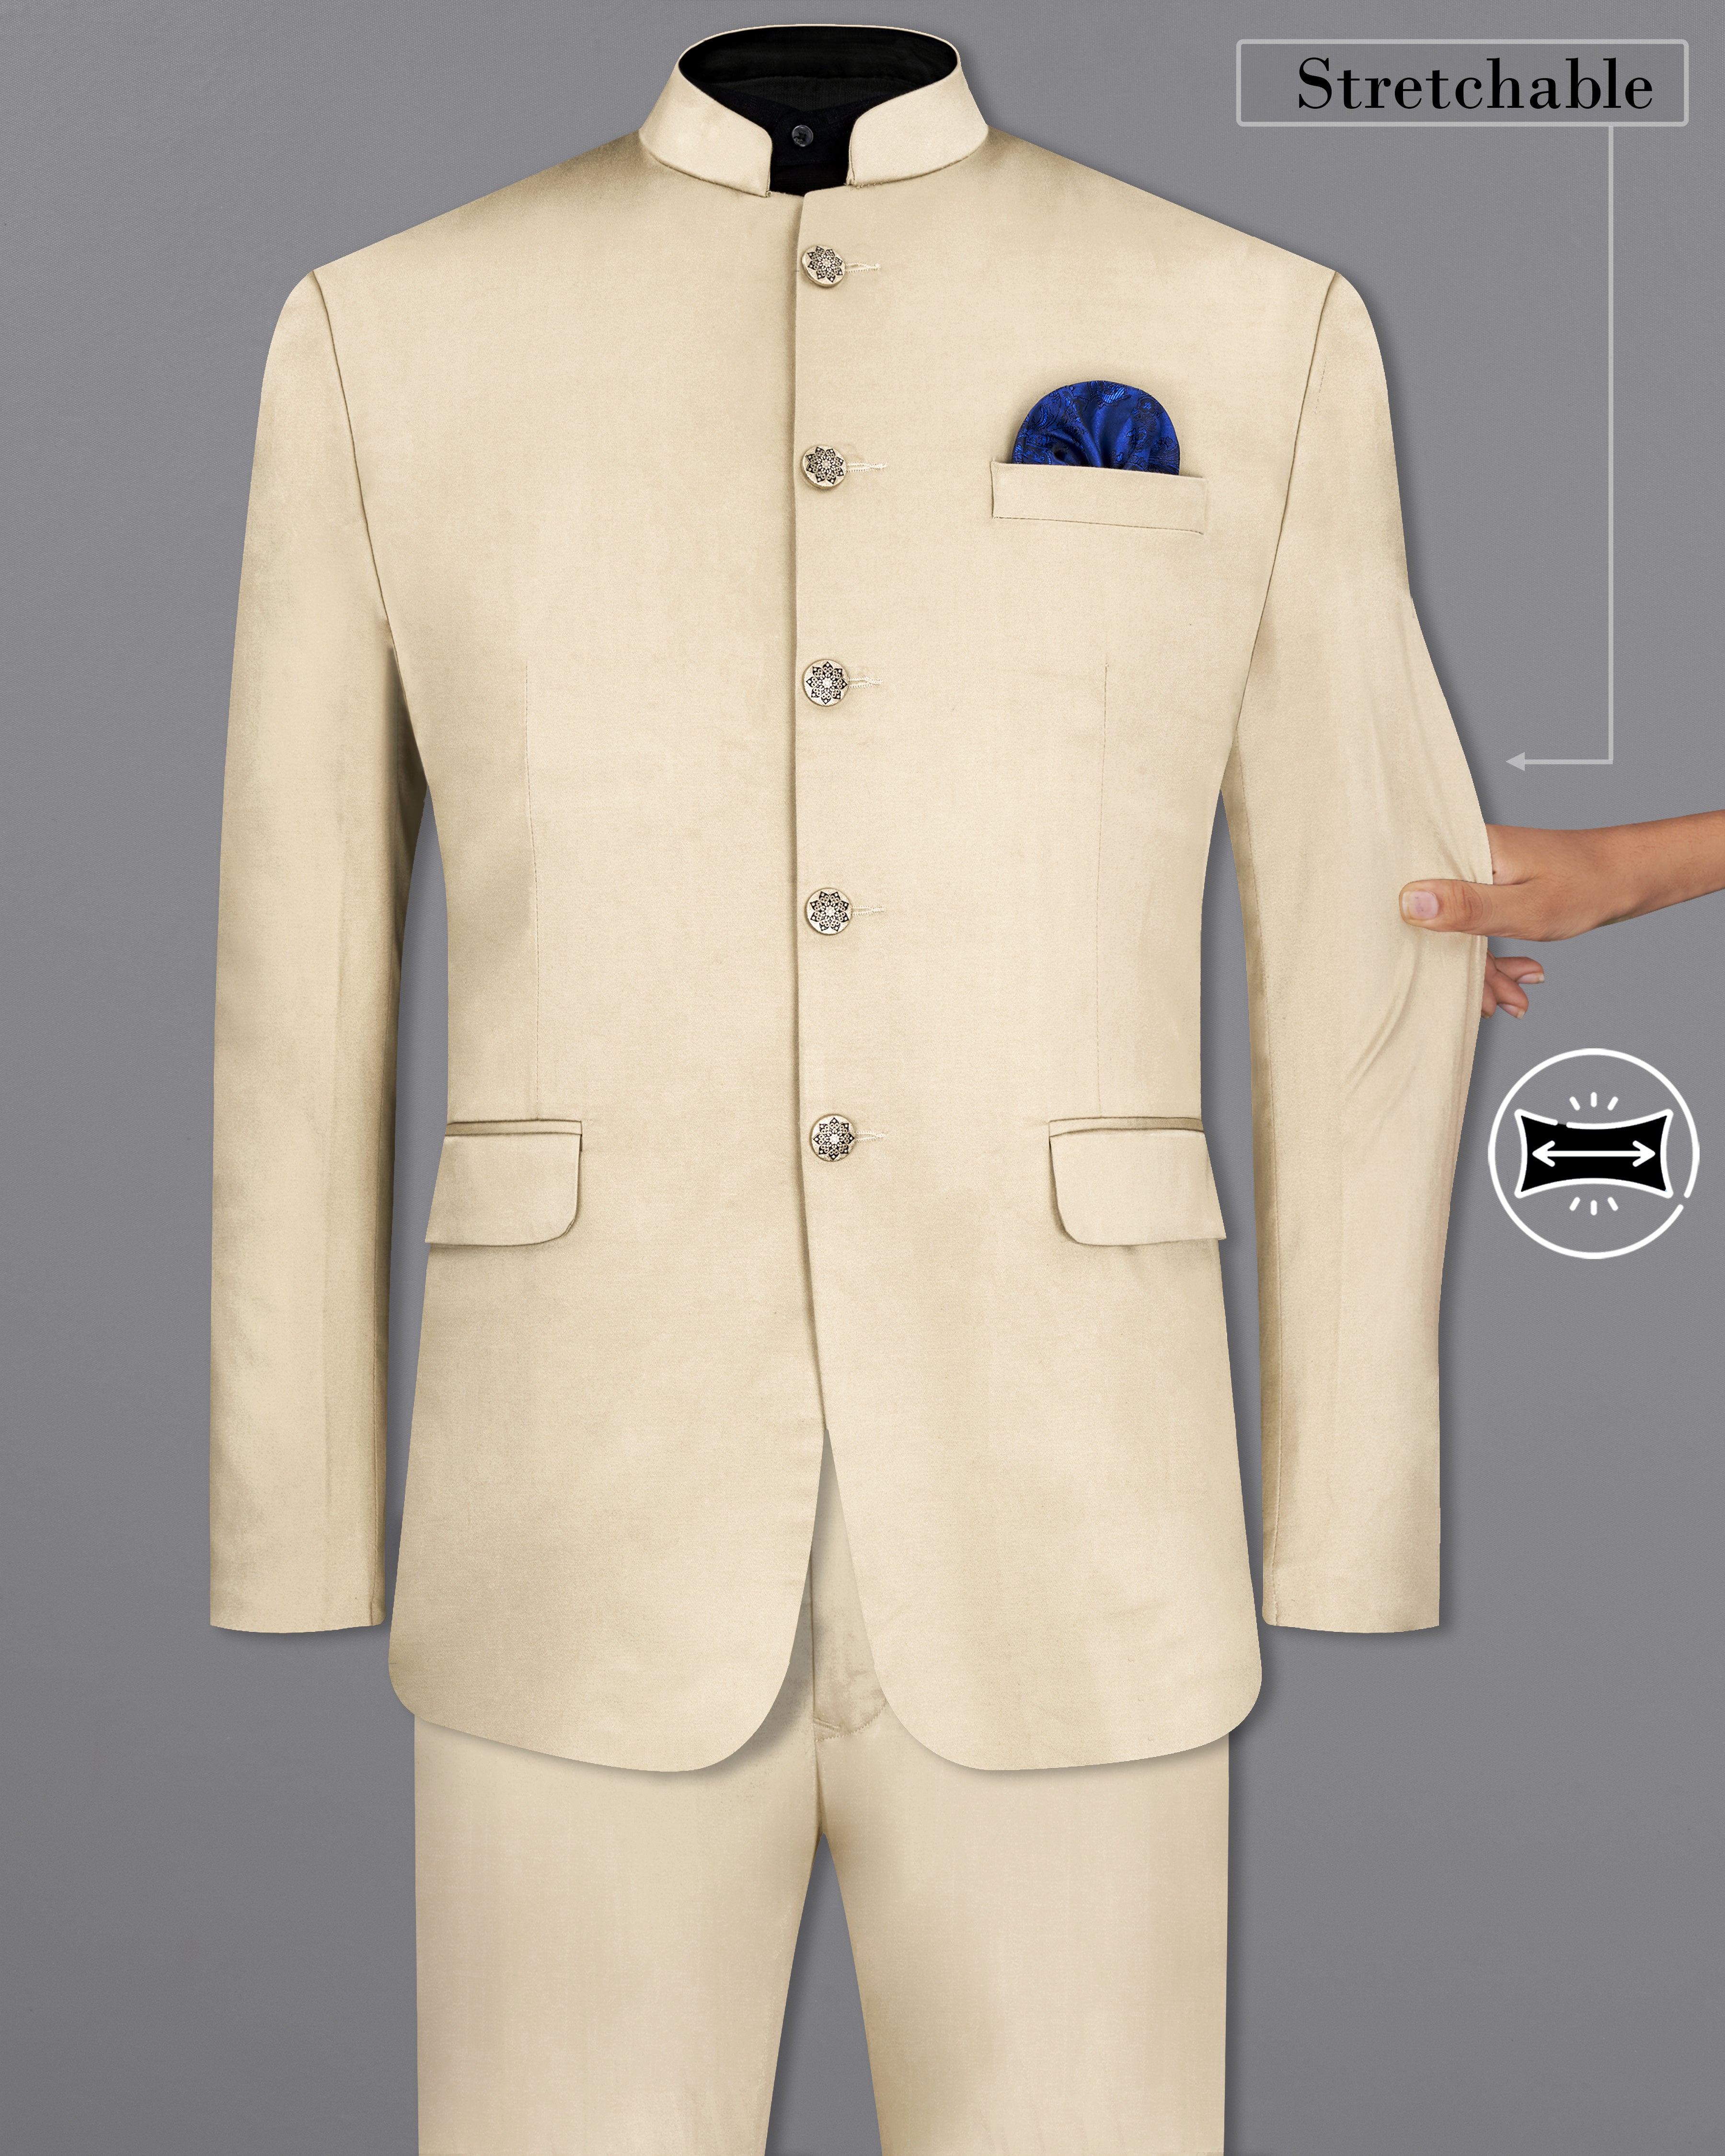 BEIGE Beige Suit Color Combinations with Shirt and Tie - Suits Expert |  ShopLook